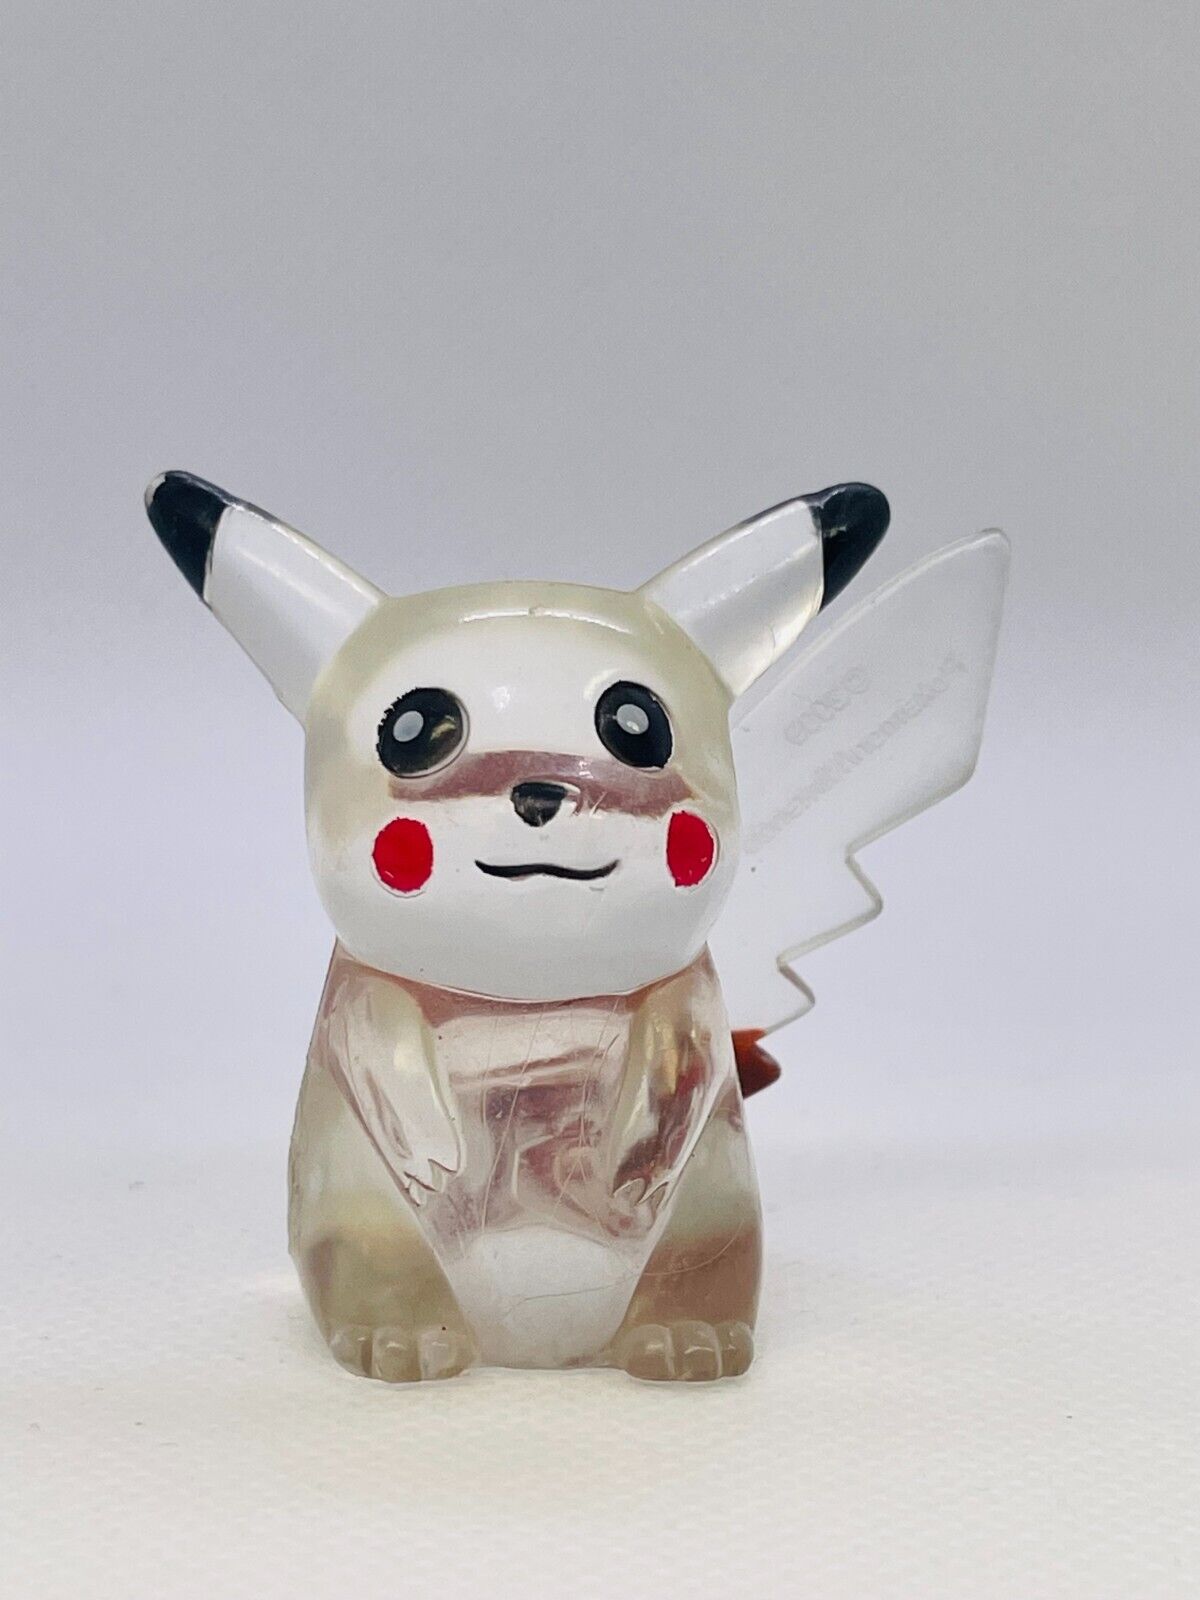 Pokémon Pikachu Candy Container Figure, Pocket Monster